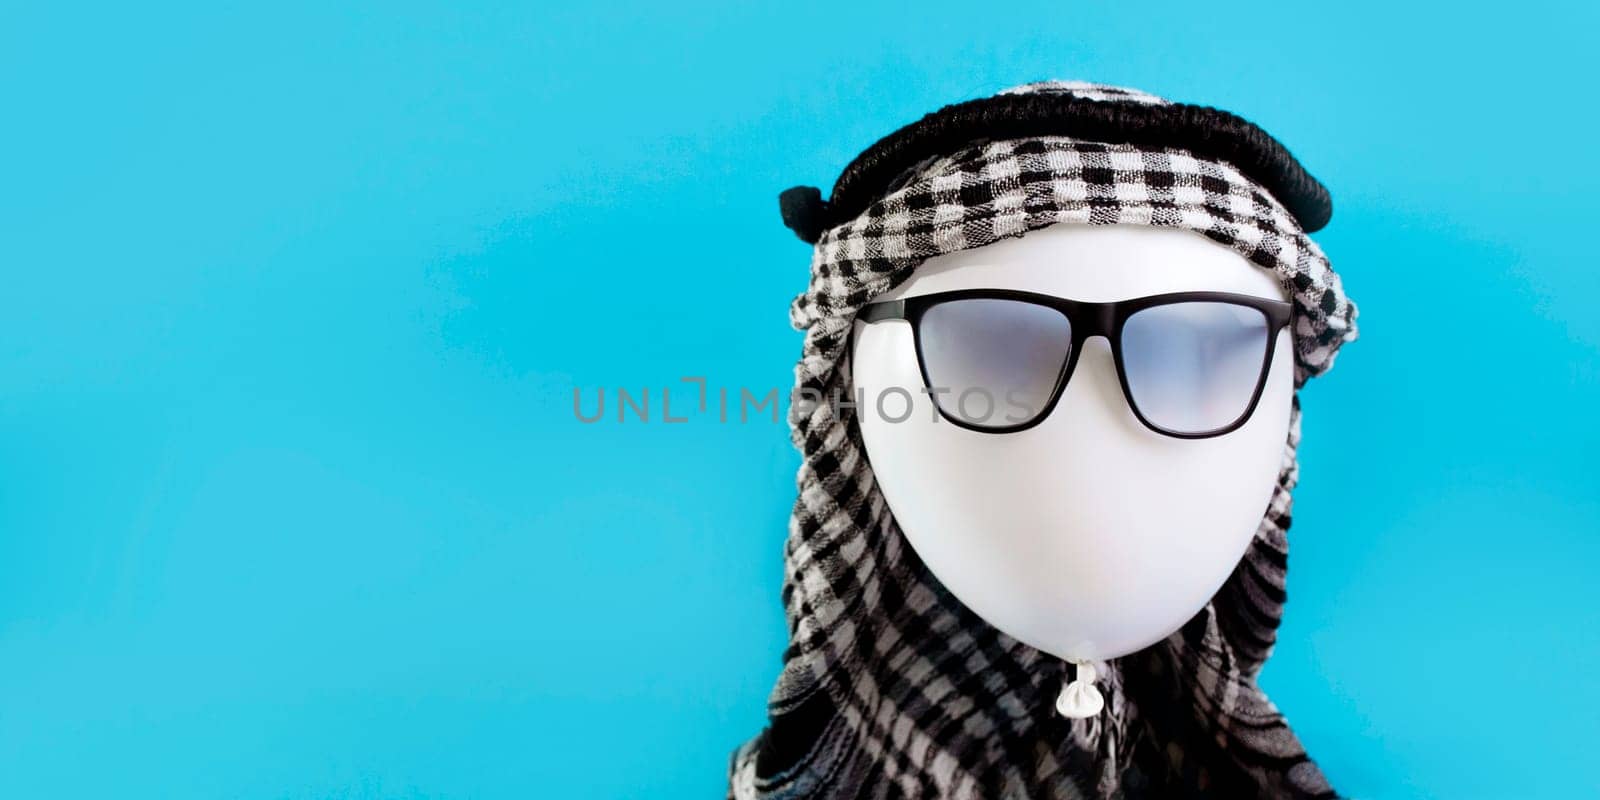 Balloon traveler in sunglasses and arafat concept tourist in Dubai or Egypt.